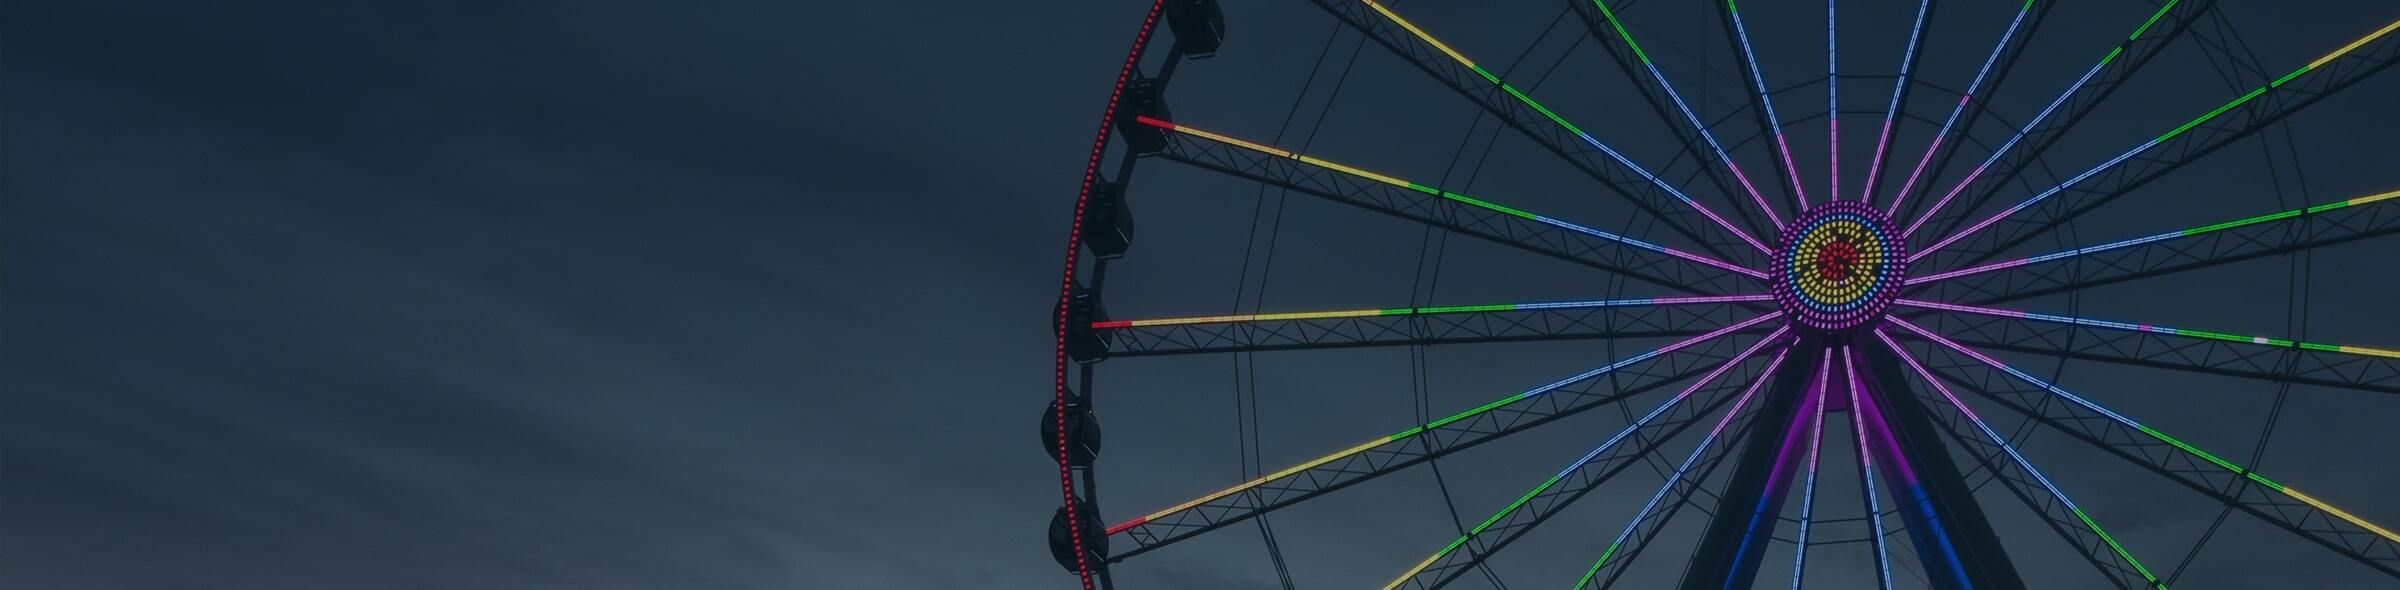 Rainbow Ferris Wheel